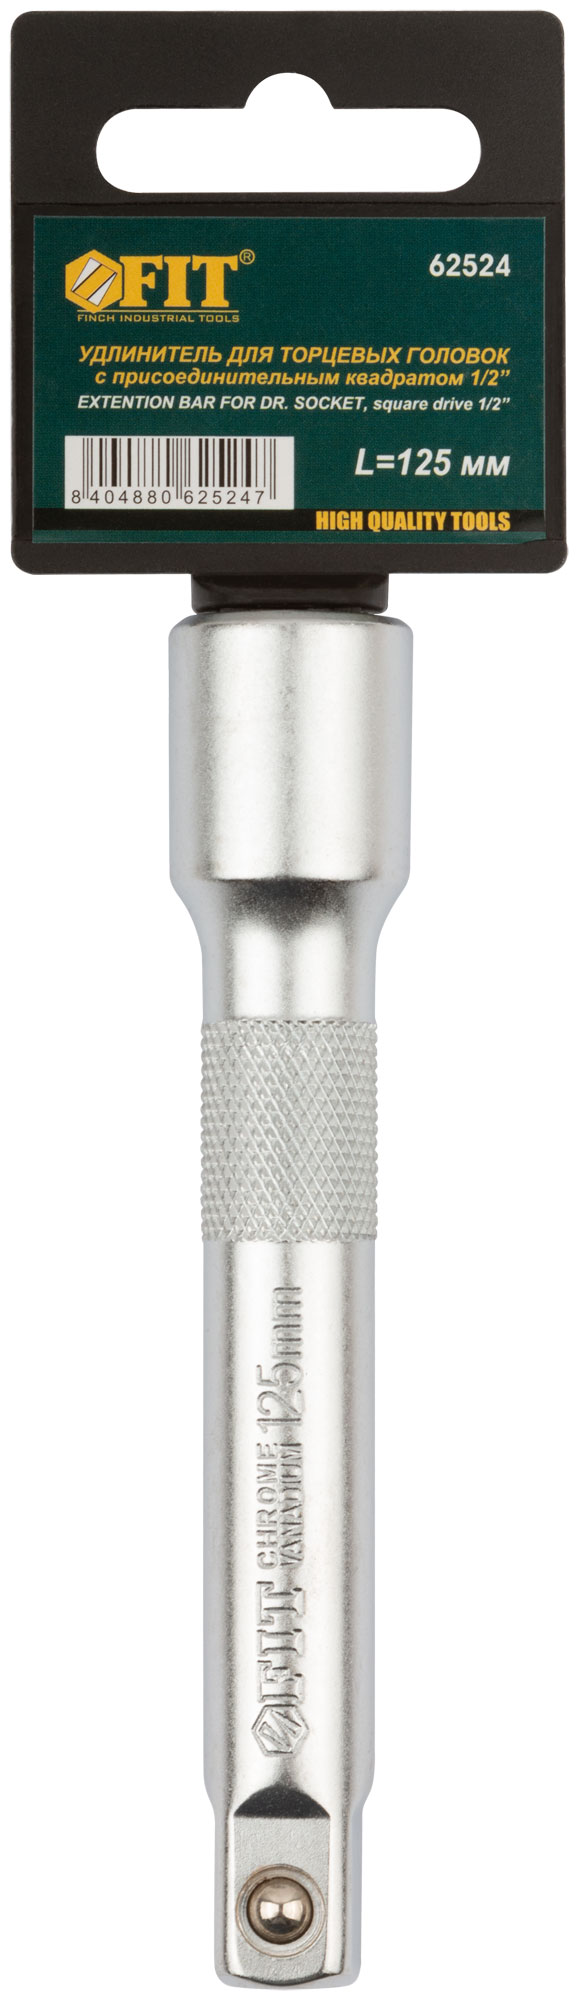 Удлинитель для воротка CrV 1/2" х 125 мм